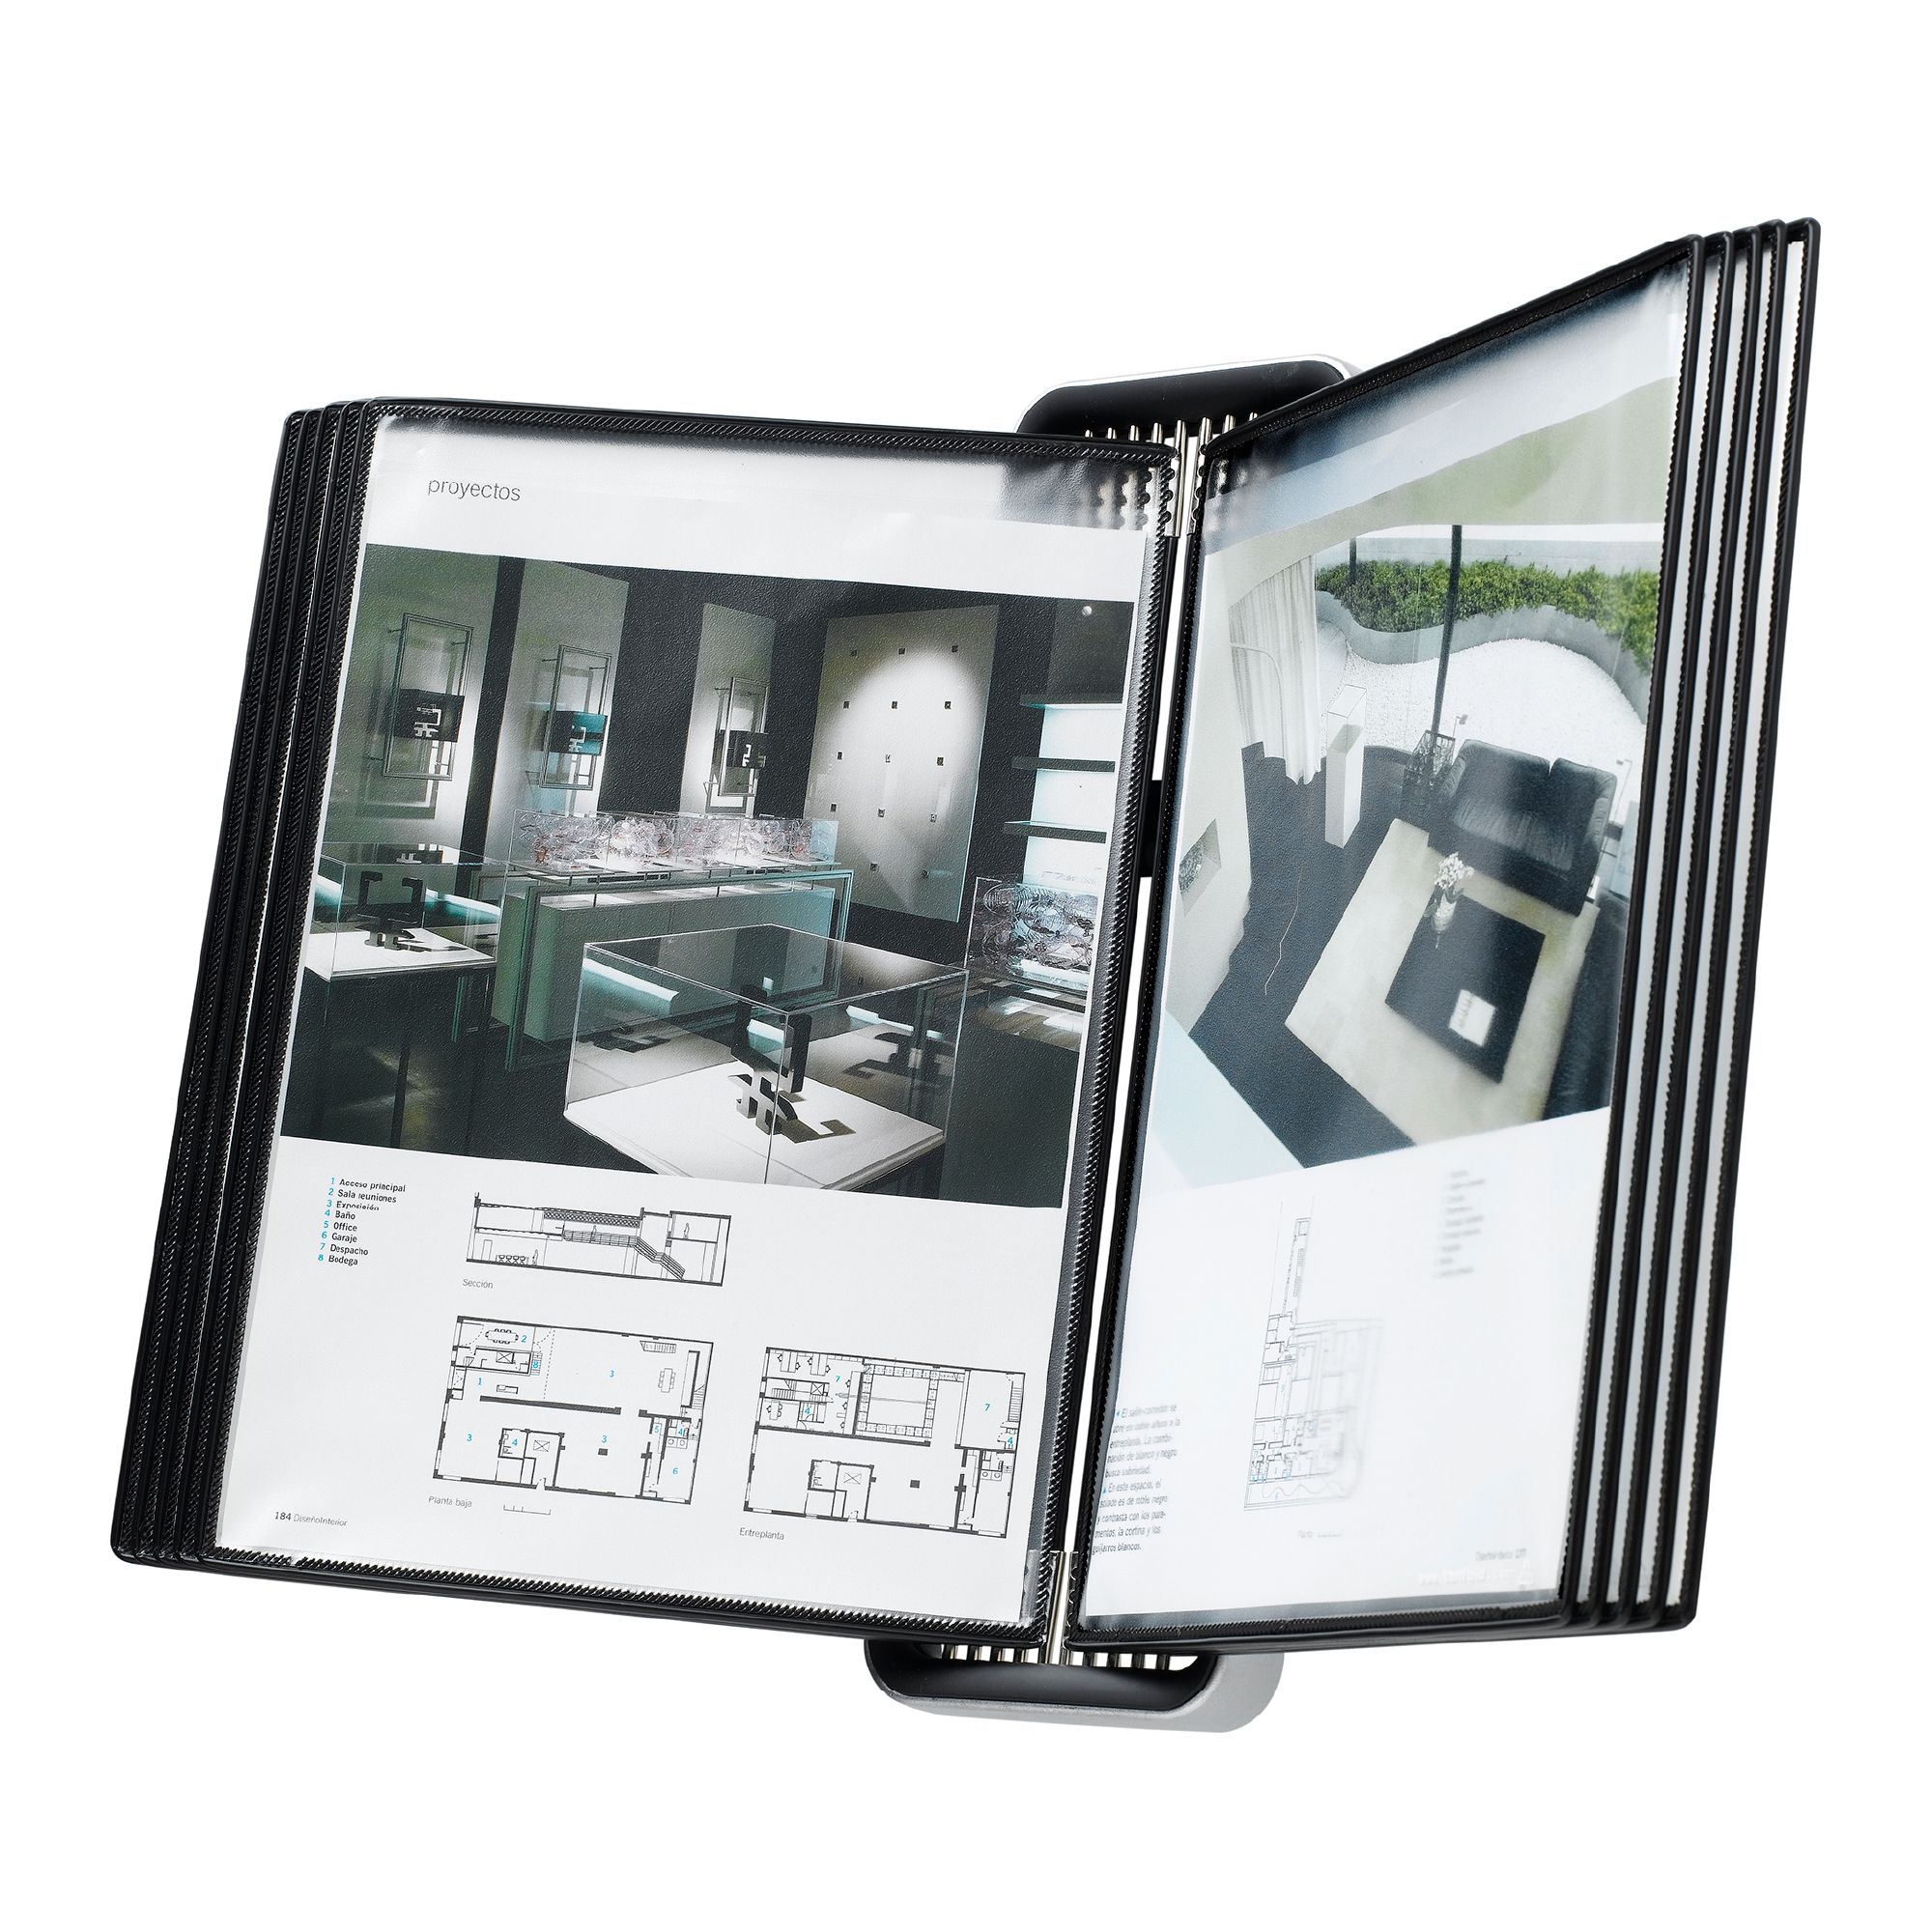 V714527 Veo Wall Display Unit With 10 Display Pockets, Black - 20 Sheet